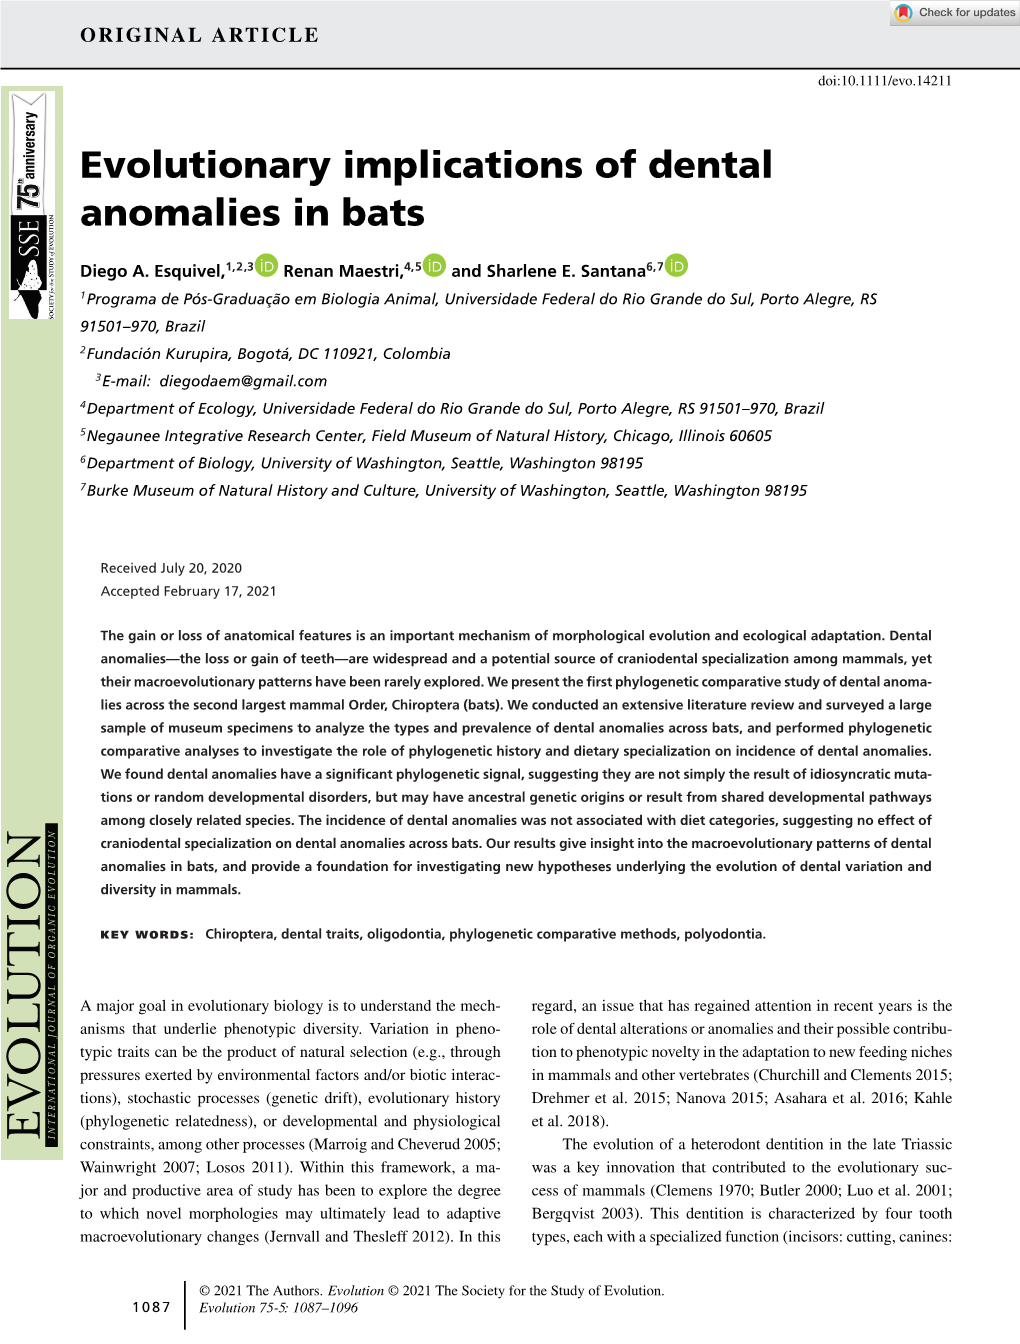 Evolutionary Implications of Dental Anomalies in Bats